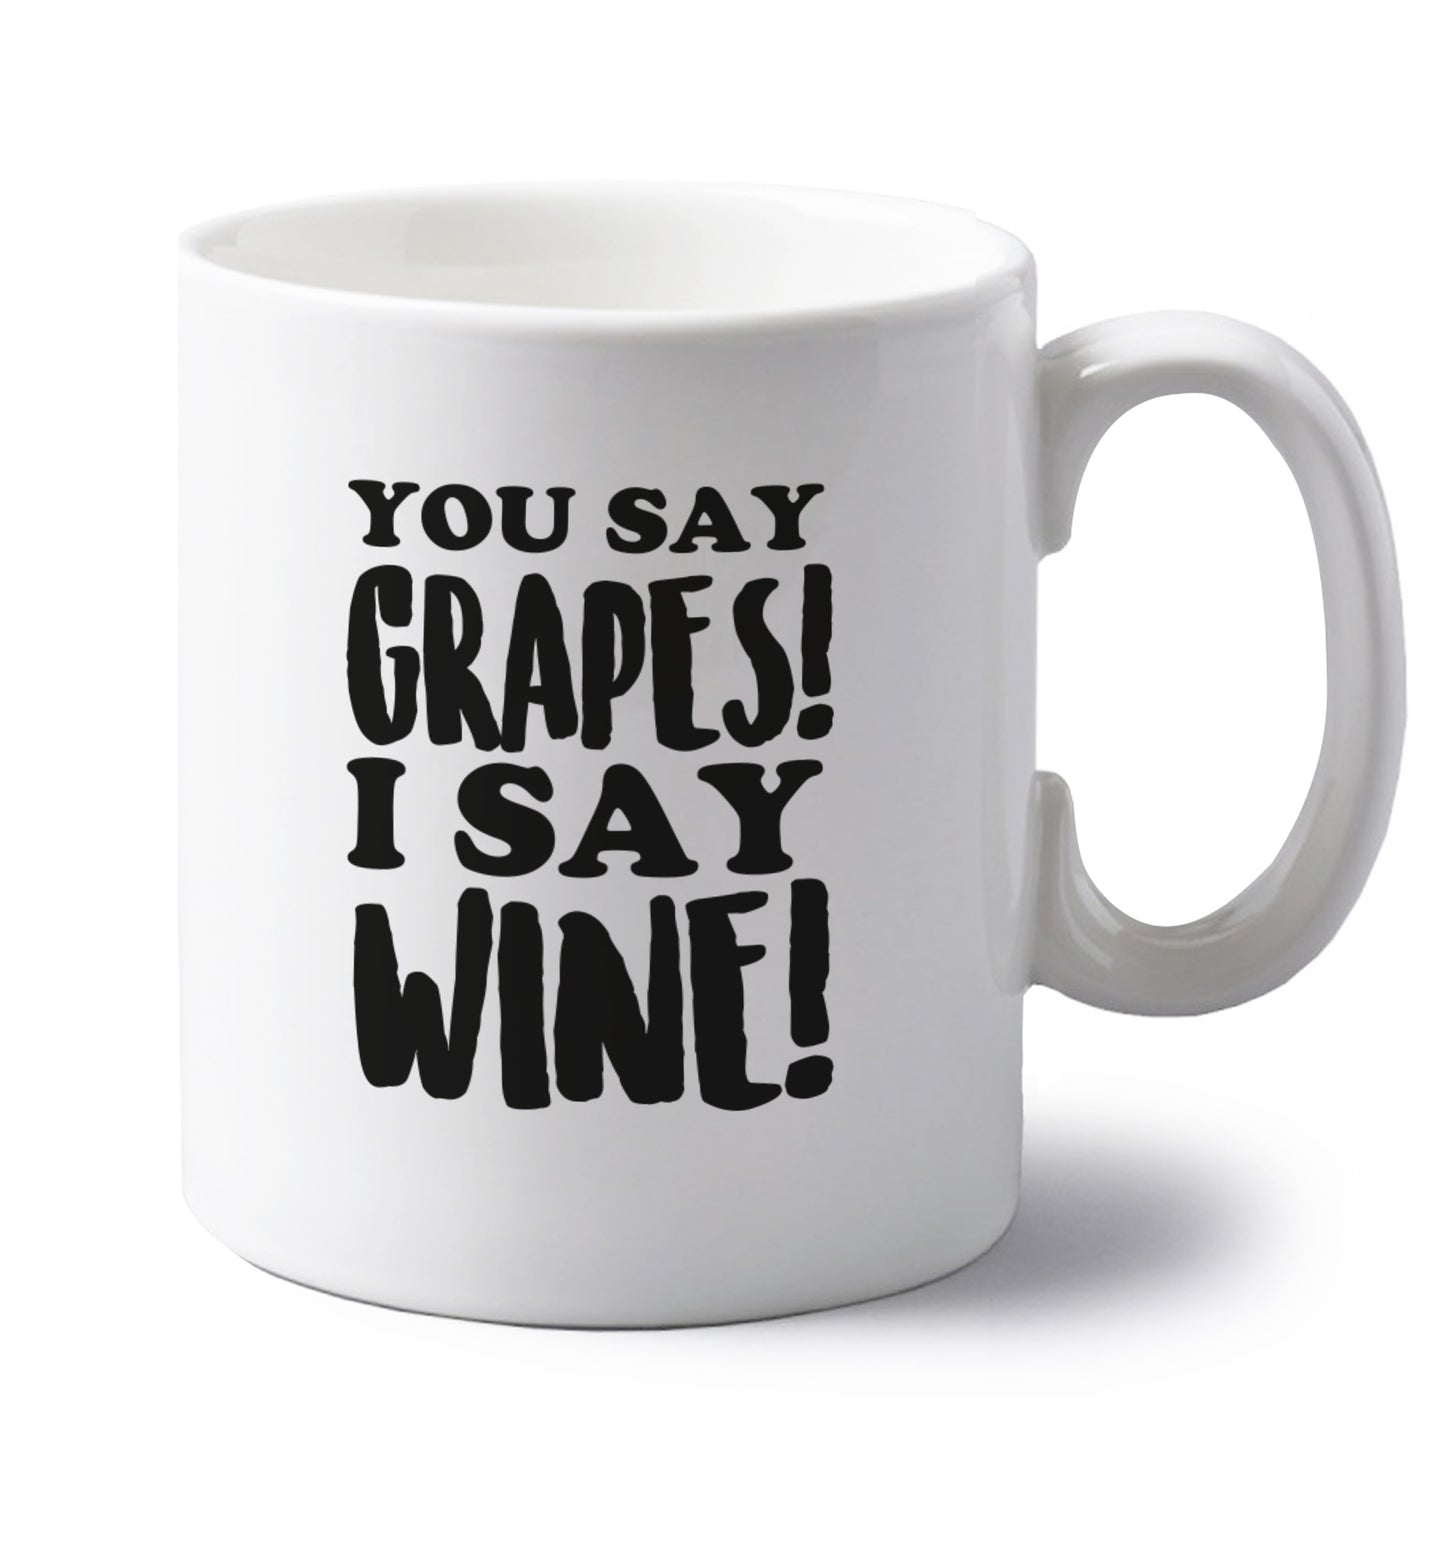 You say grapes I say wine! left handed white ceramic mug 